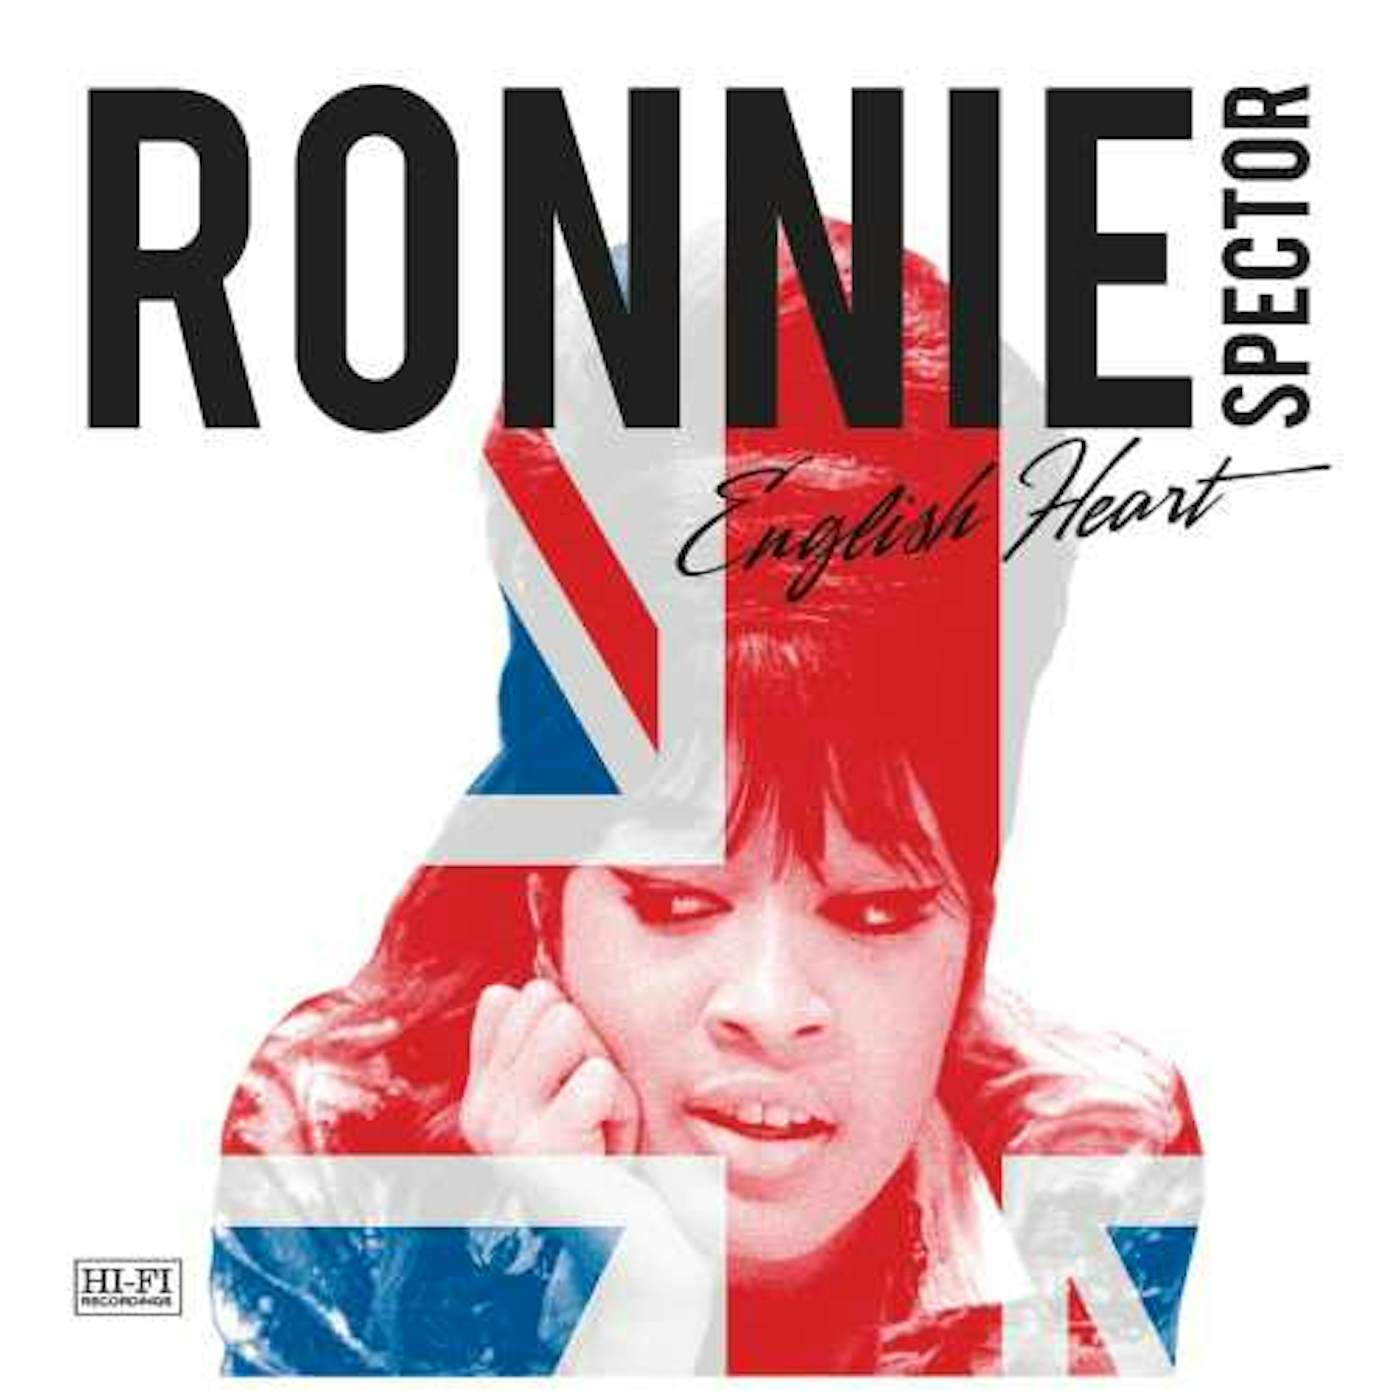 Ronnie Spector ENGLISH HEART CD